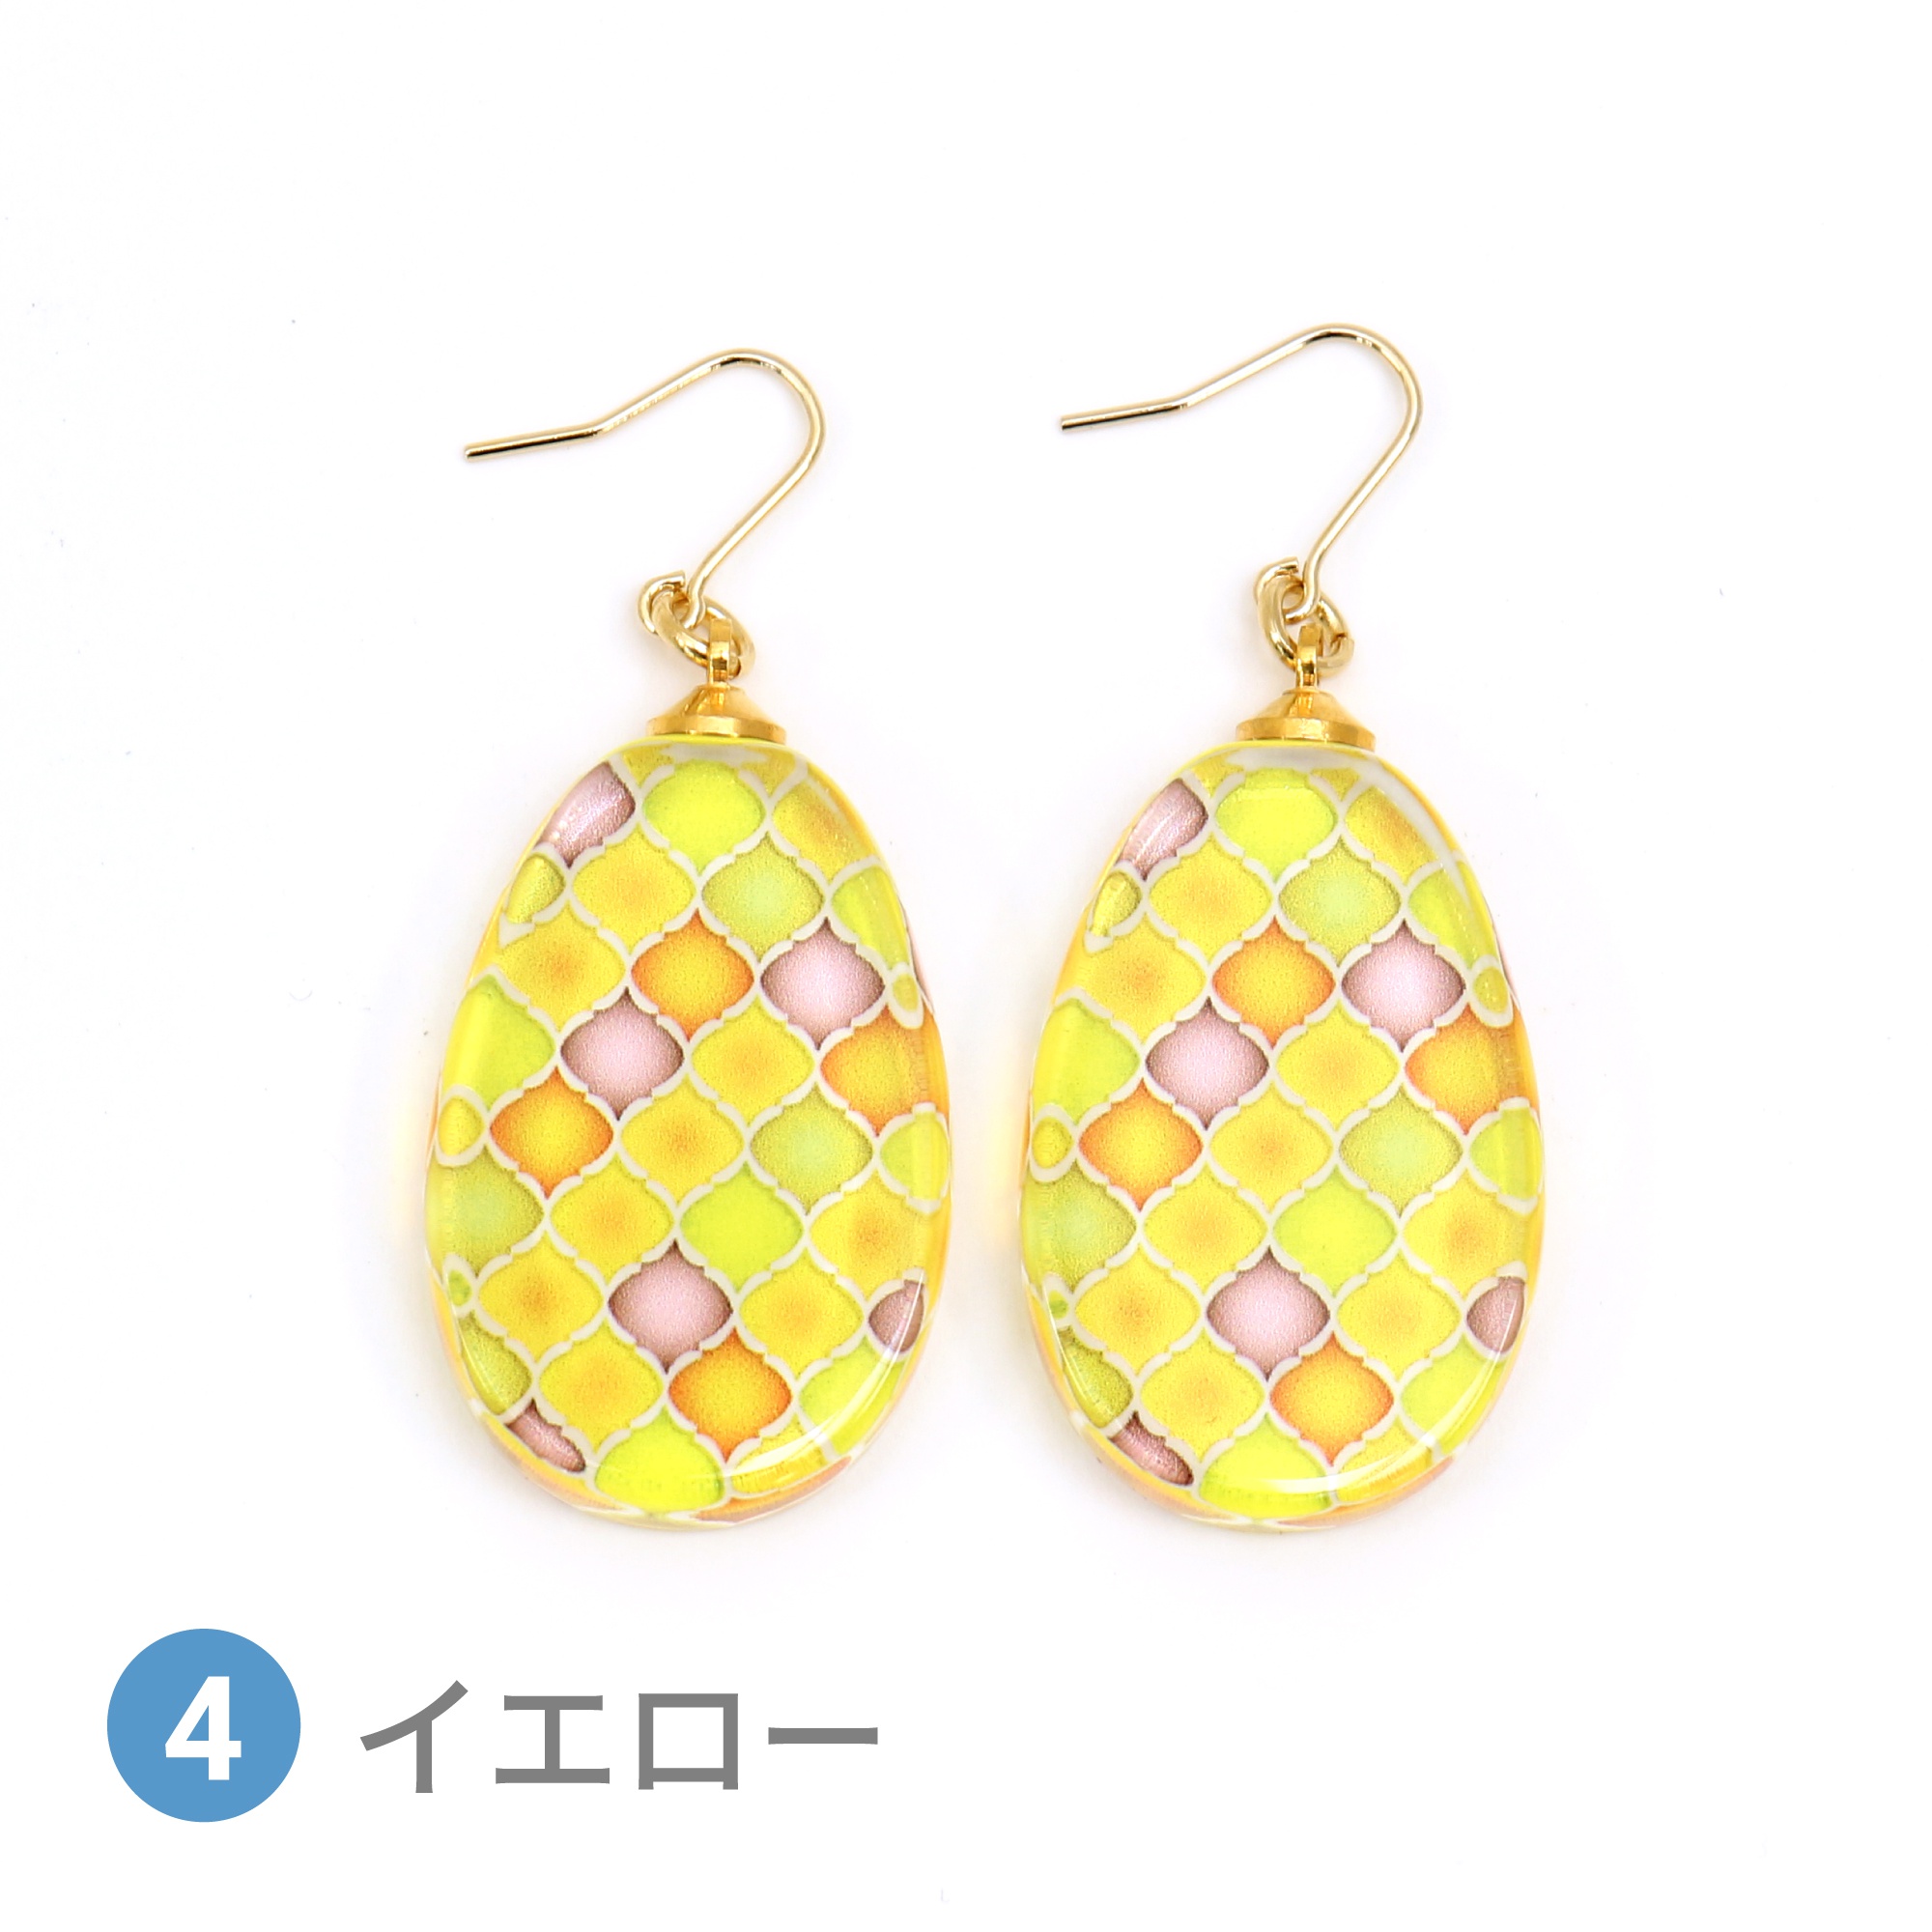 Glass accessories Pierced Earring MOROCCAN yellow drop shape